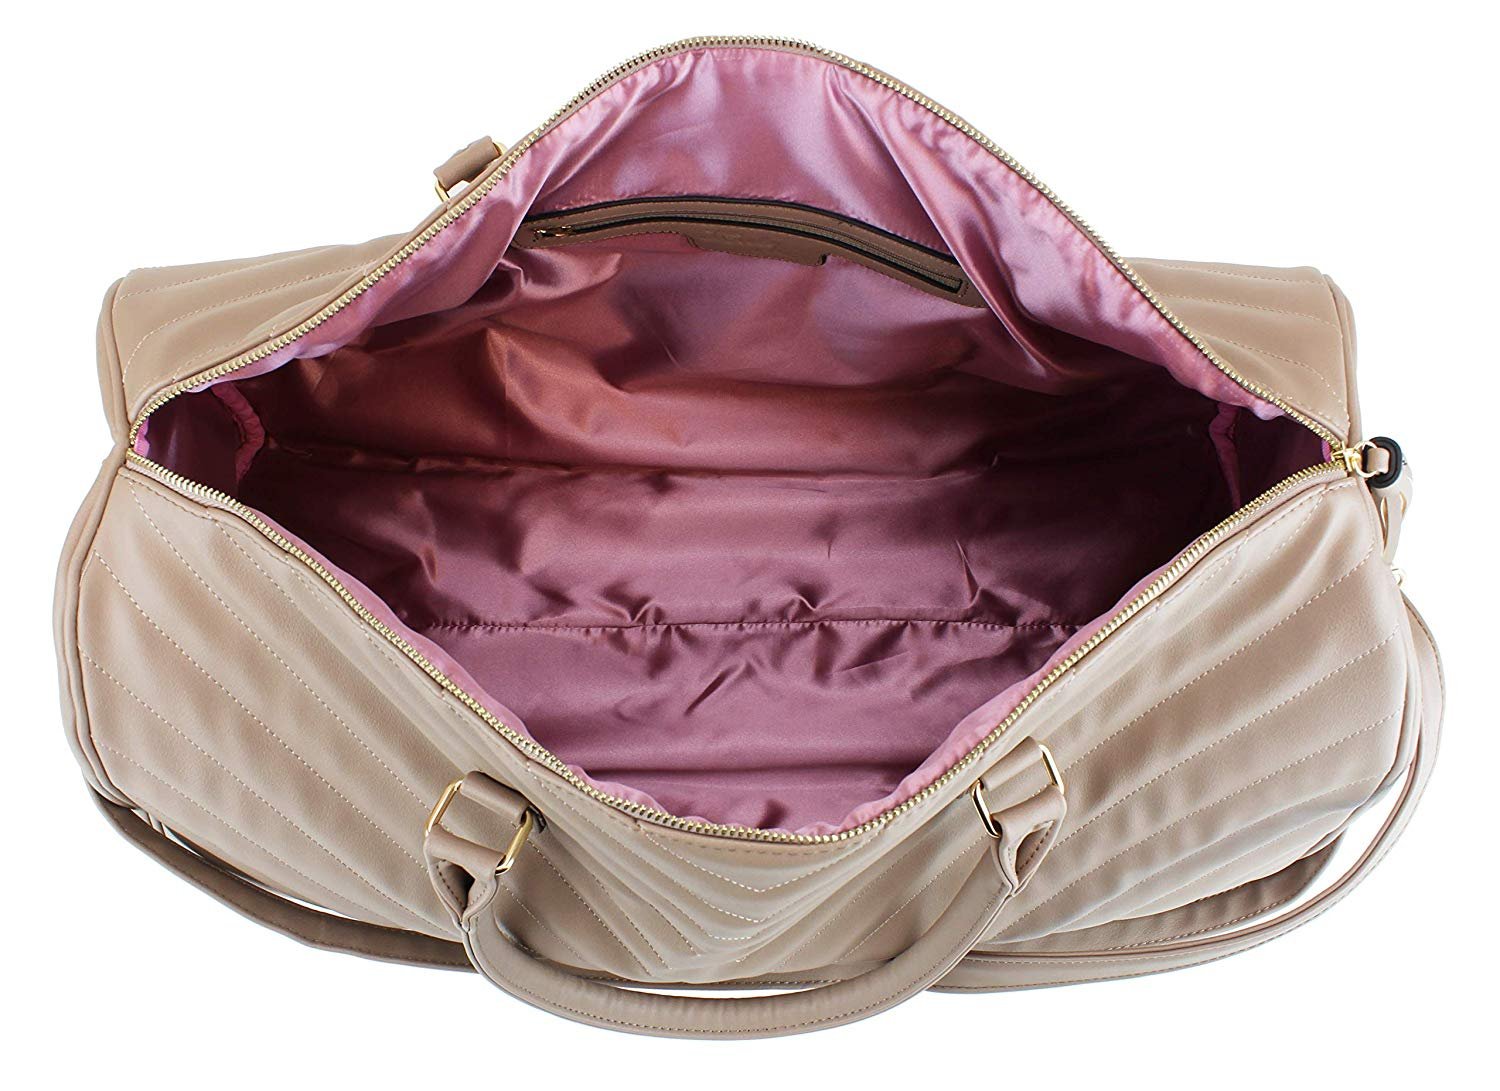 Pink Duffle Bags - Macy's